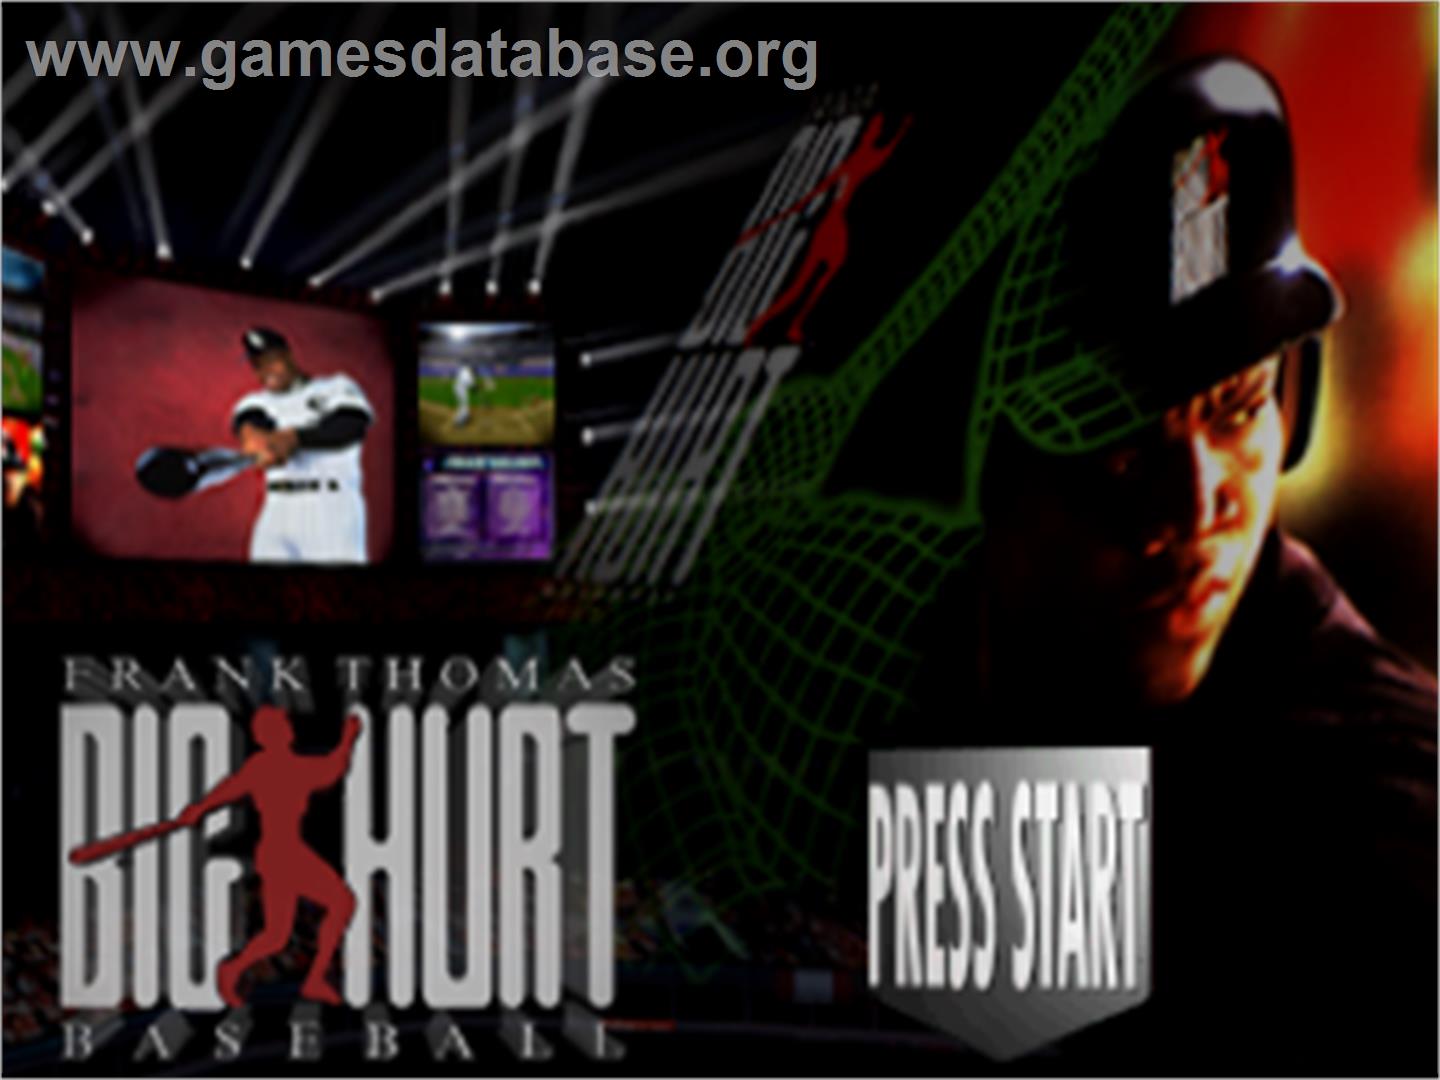 Frank Thomas Big Hurt Baseball - Sega Saturn - Artwork - Title Screen